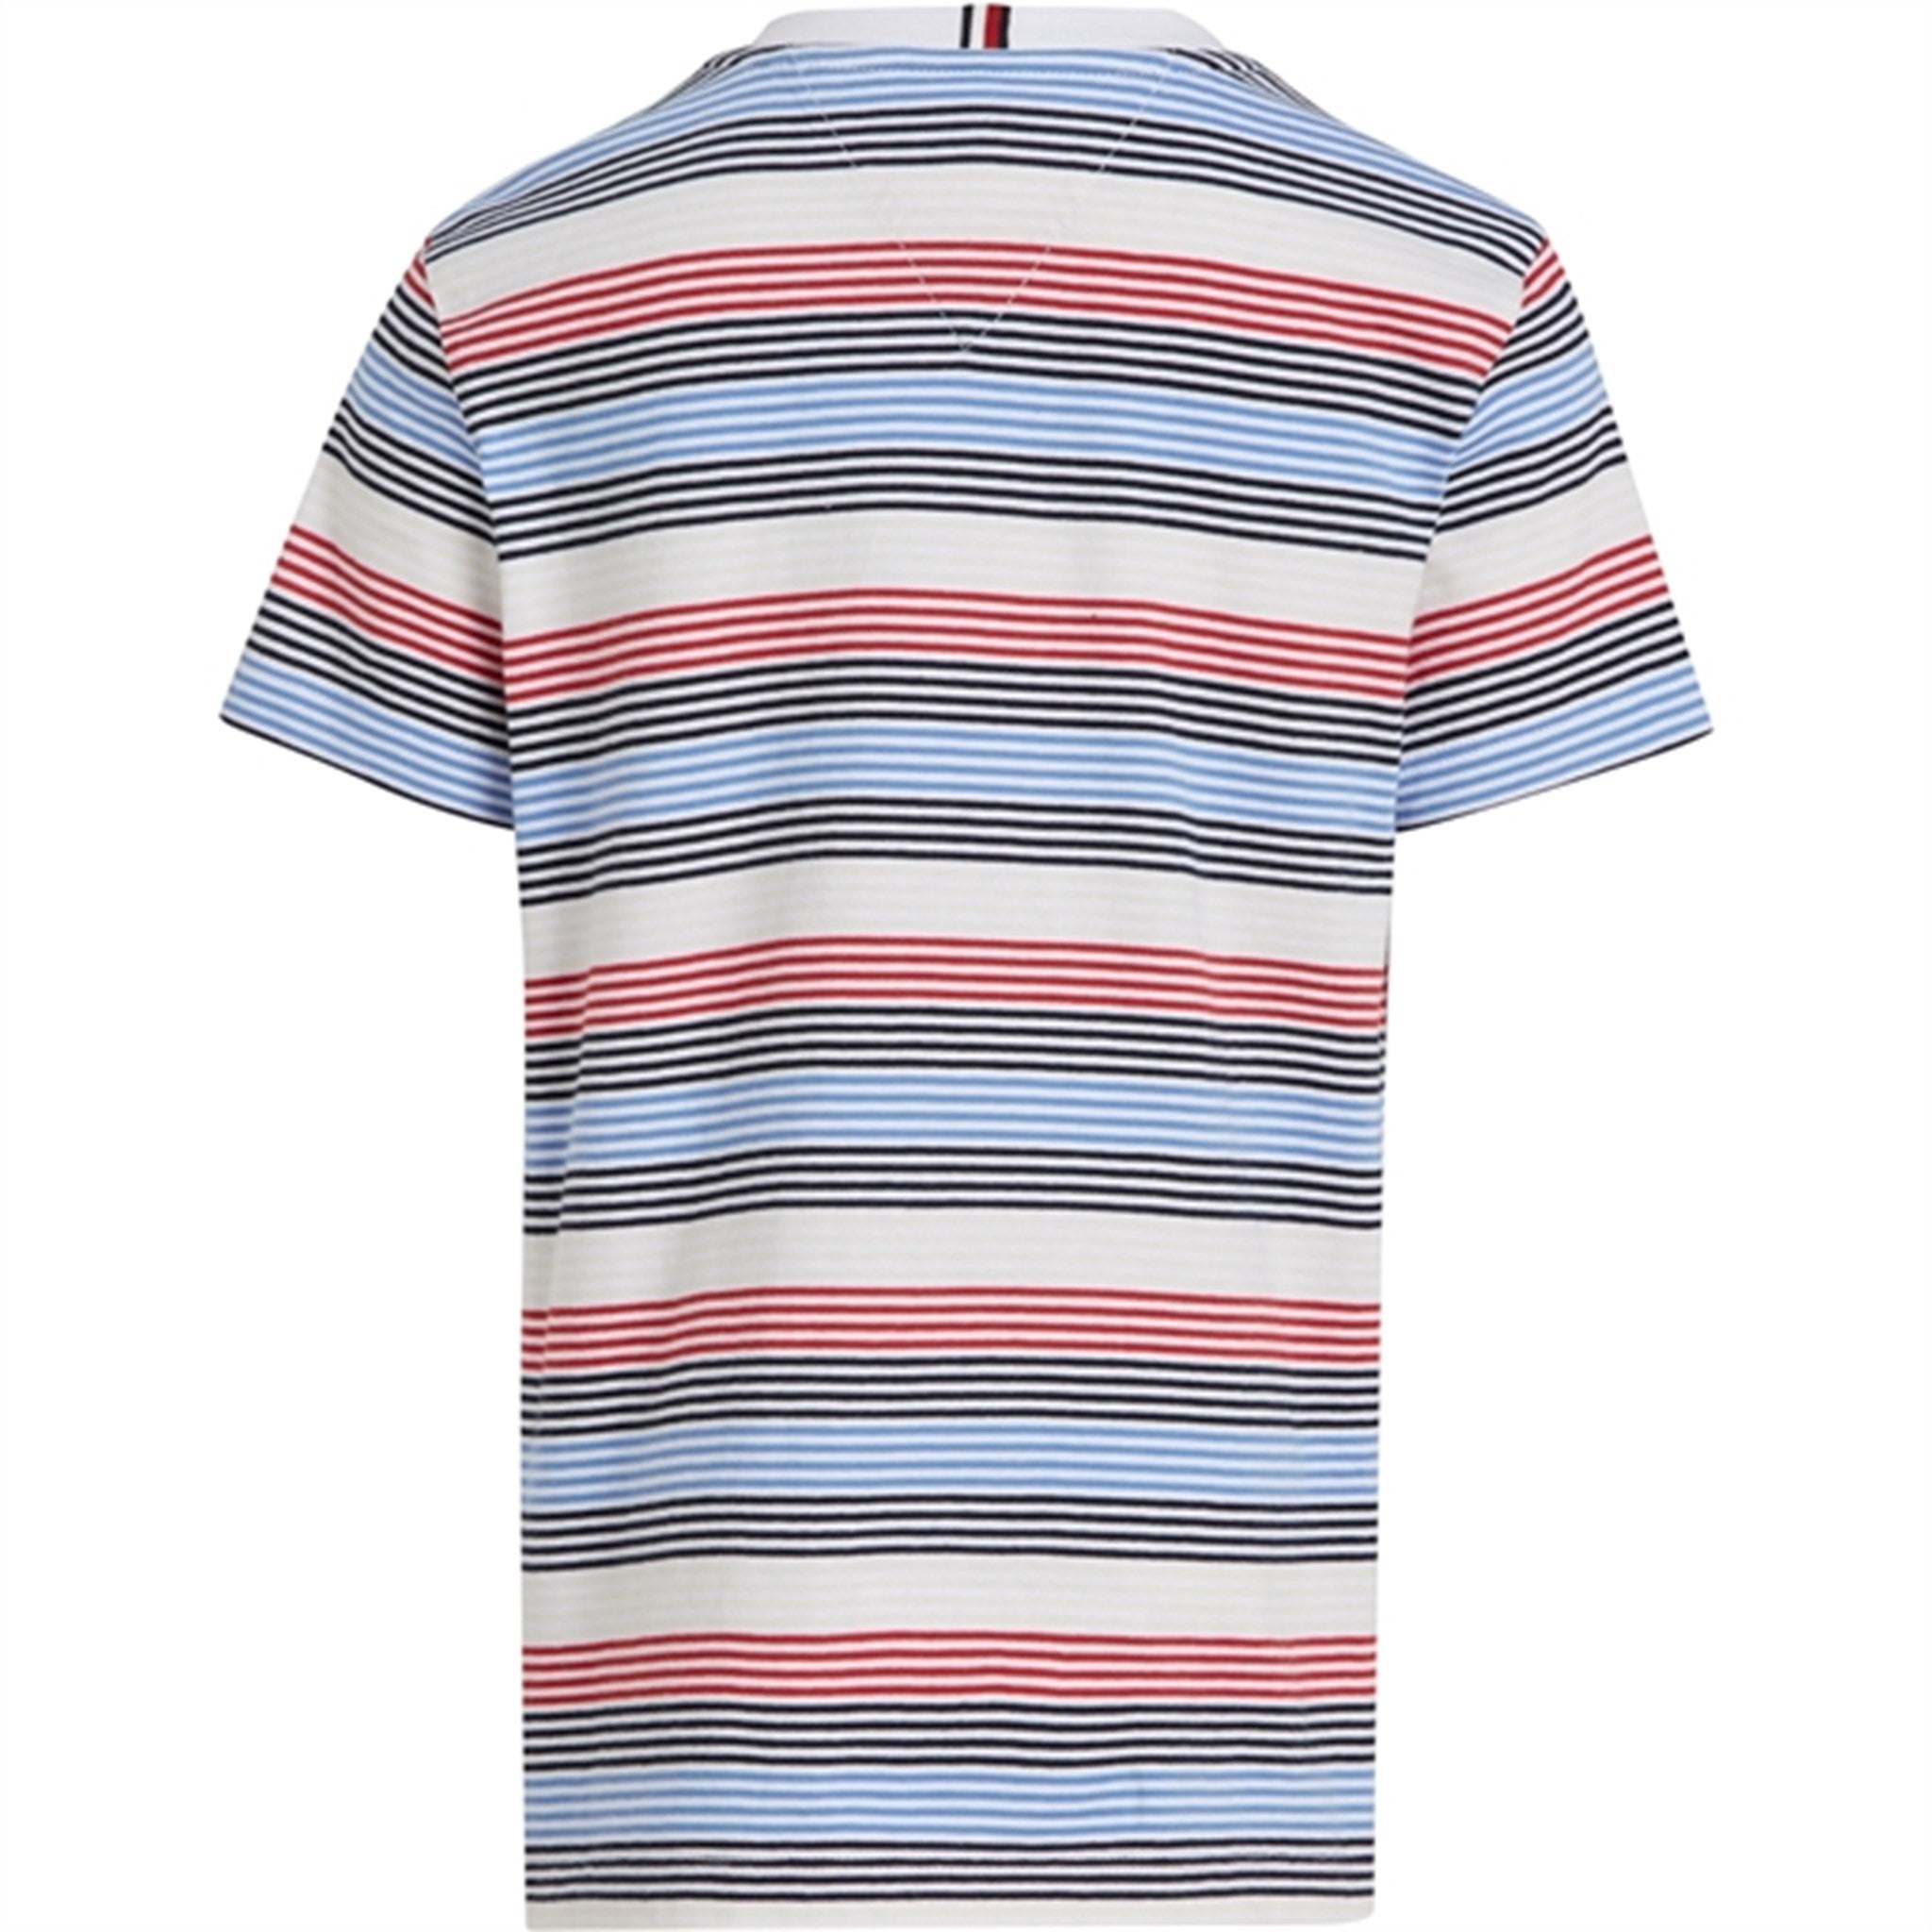 Tommy Hilfiger Corporate Stripe T-Shirt Red White Blue Stripe 5